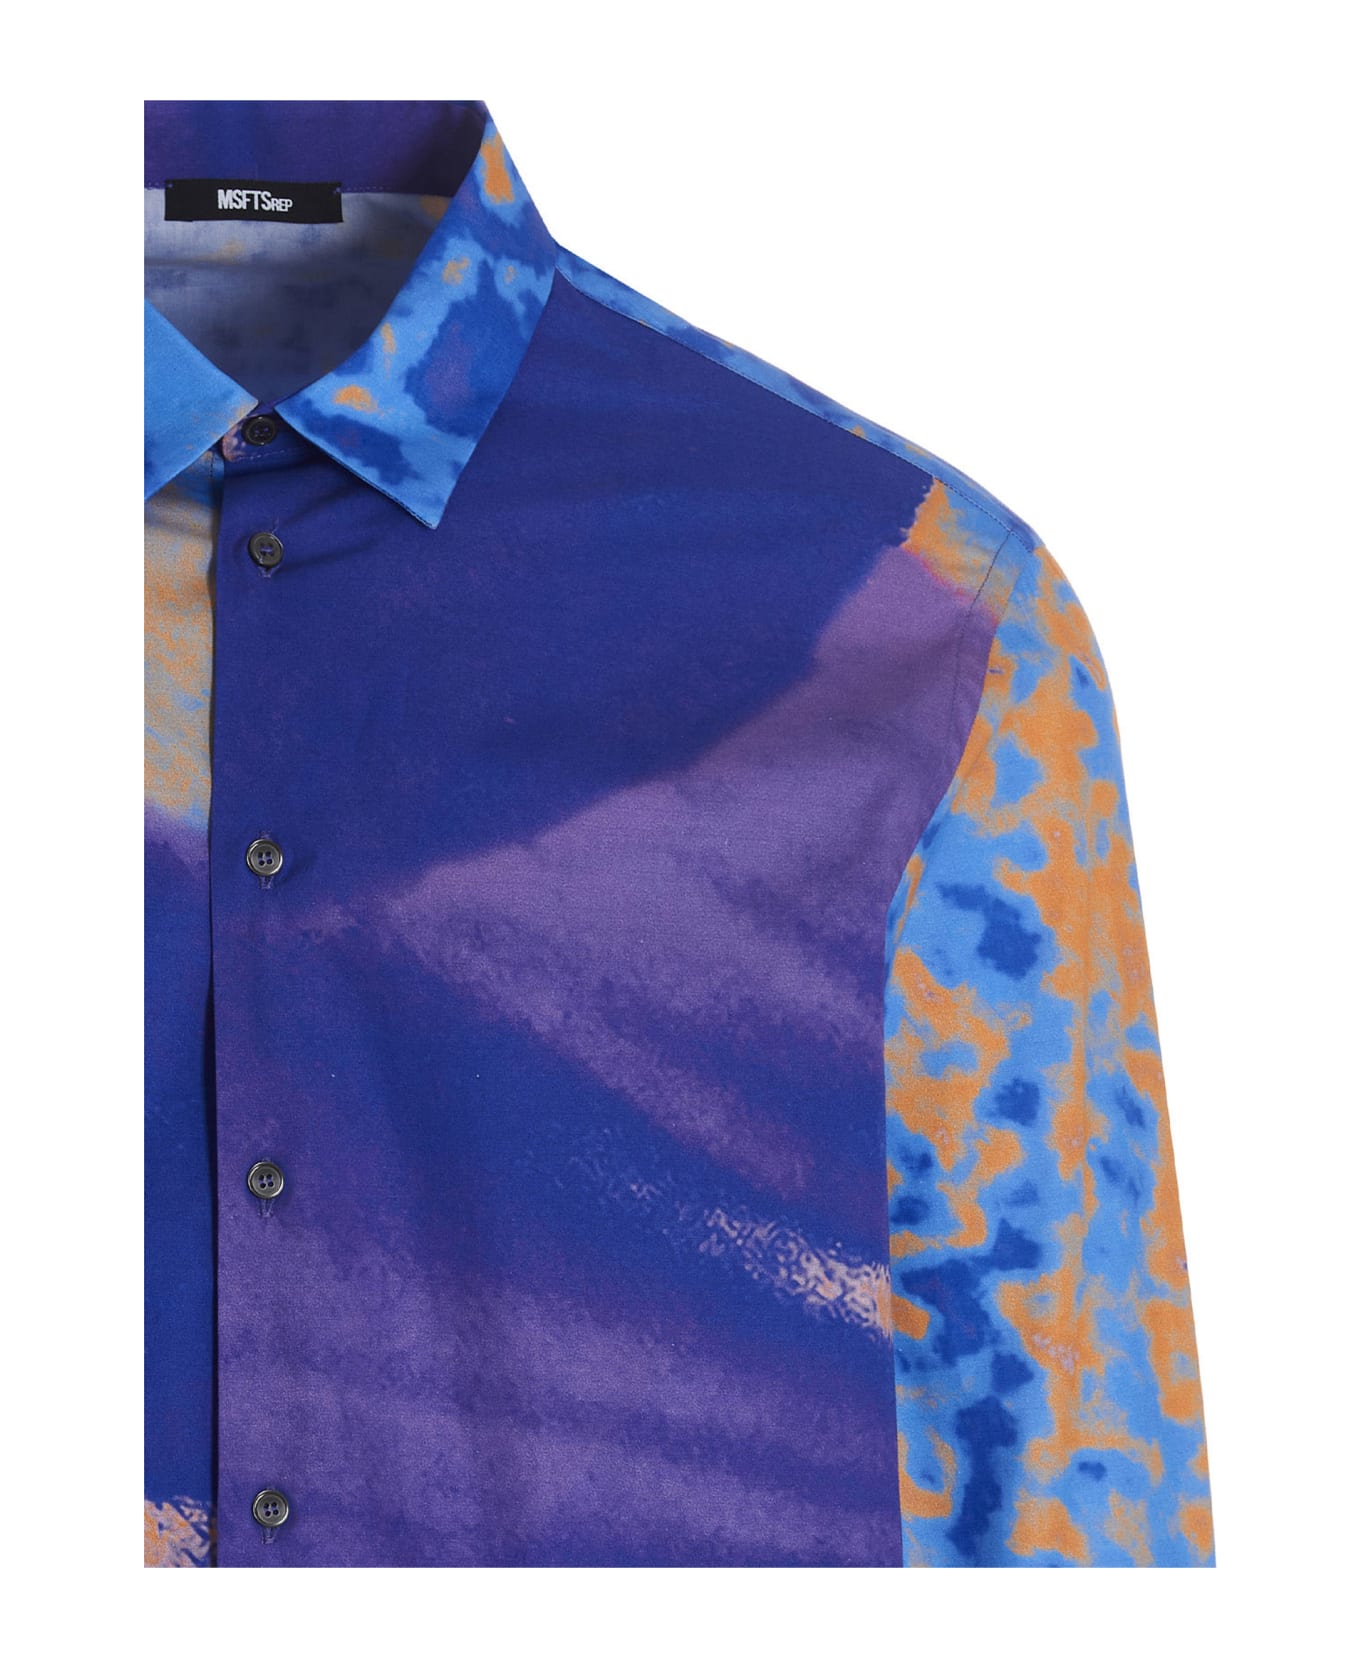 MSFTSrep All-over Print Shirt - Multicolor